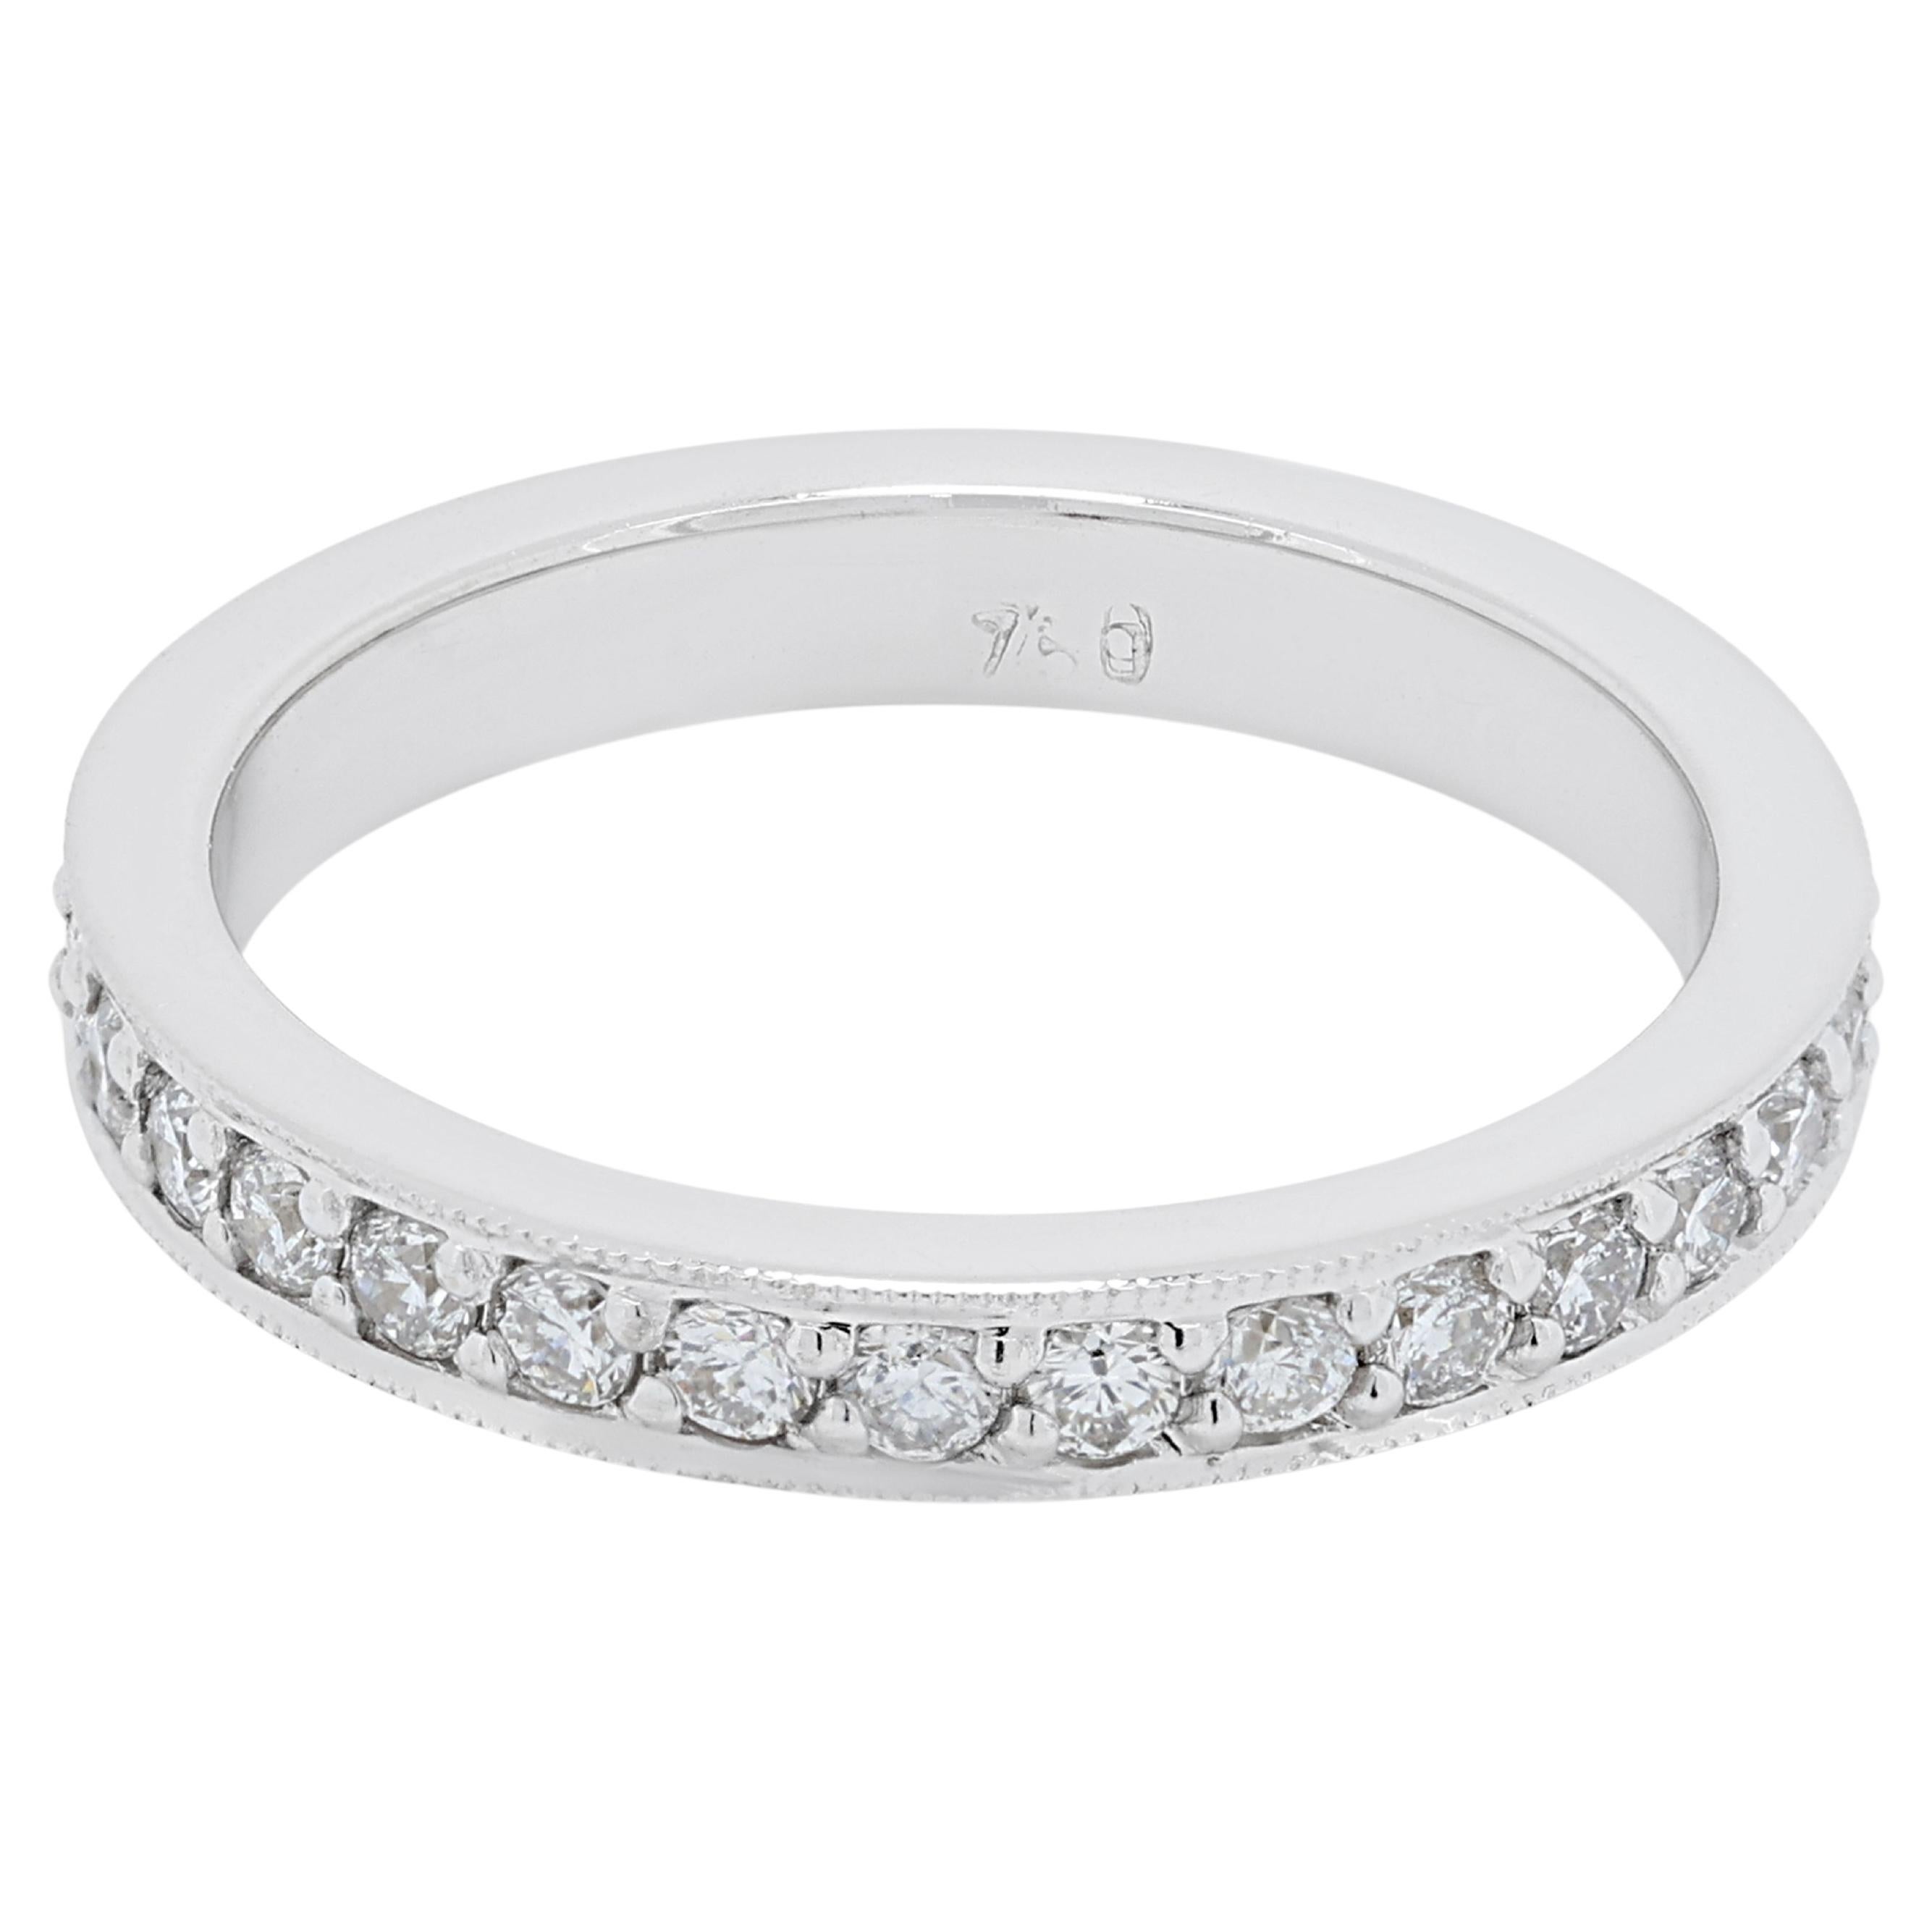 Stunning 0.21ct Diamonds Eternity Ring in 18k White Gold